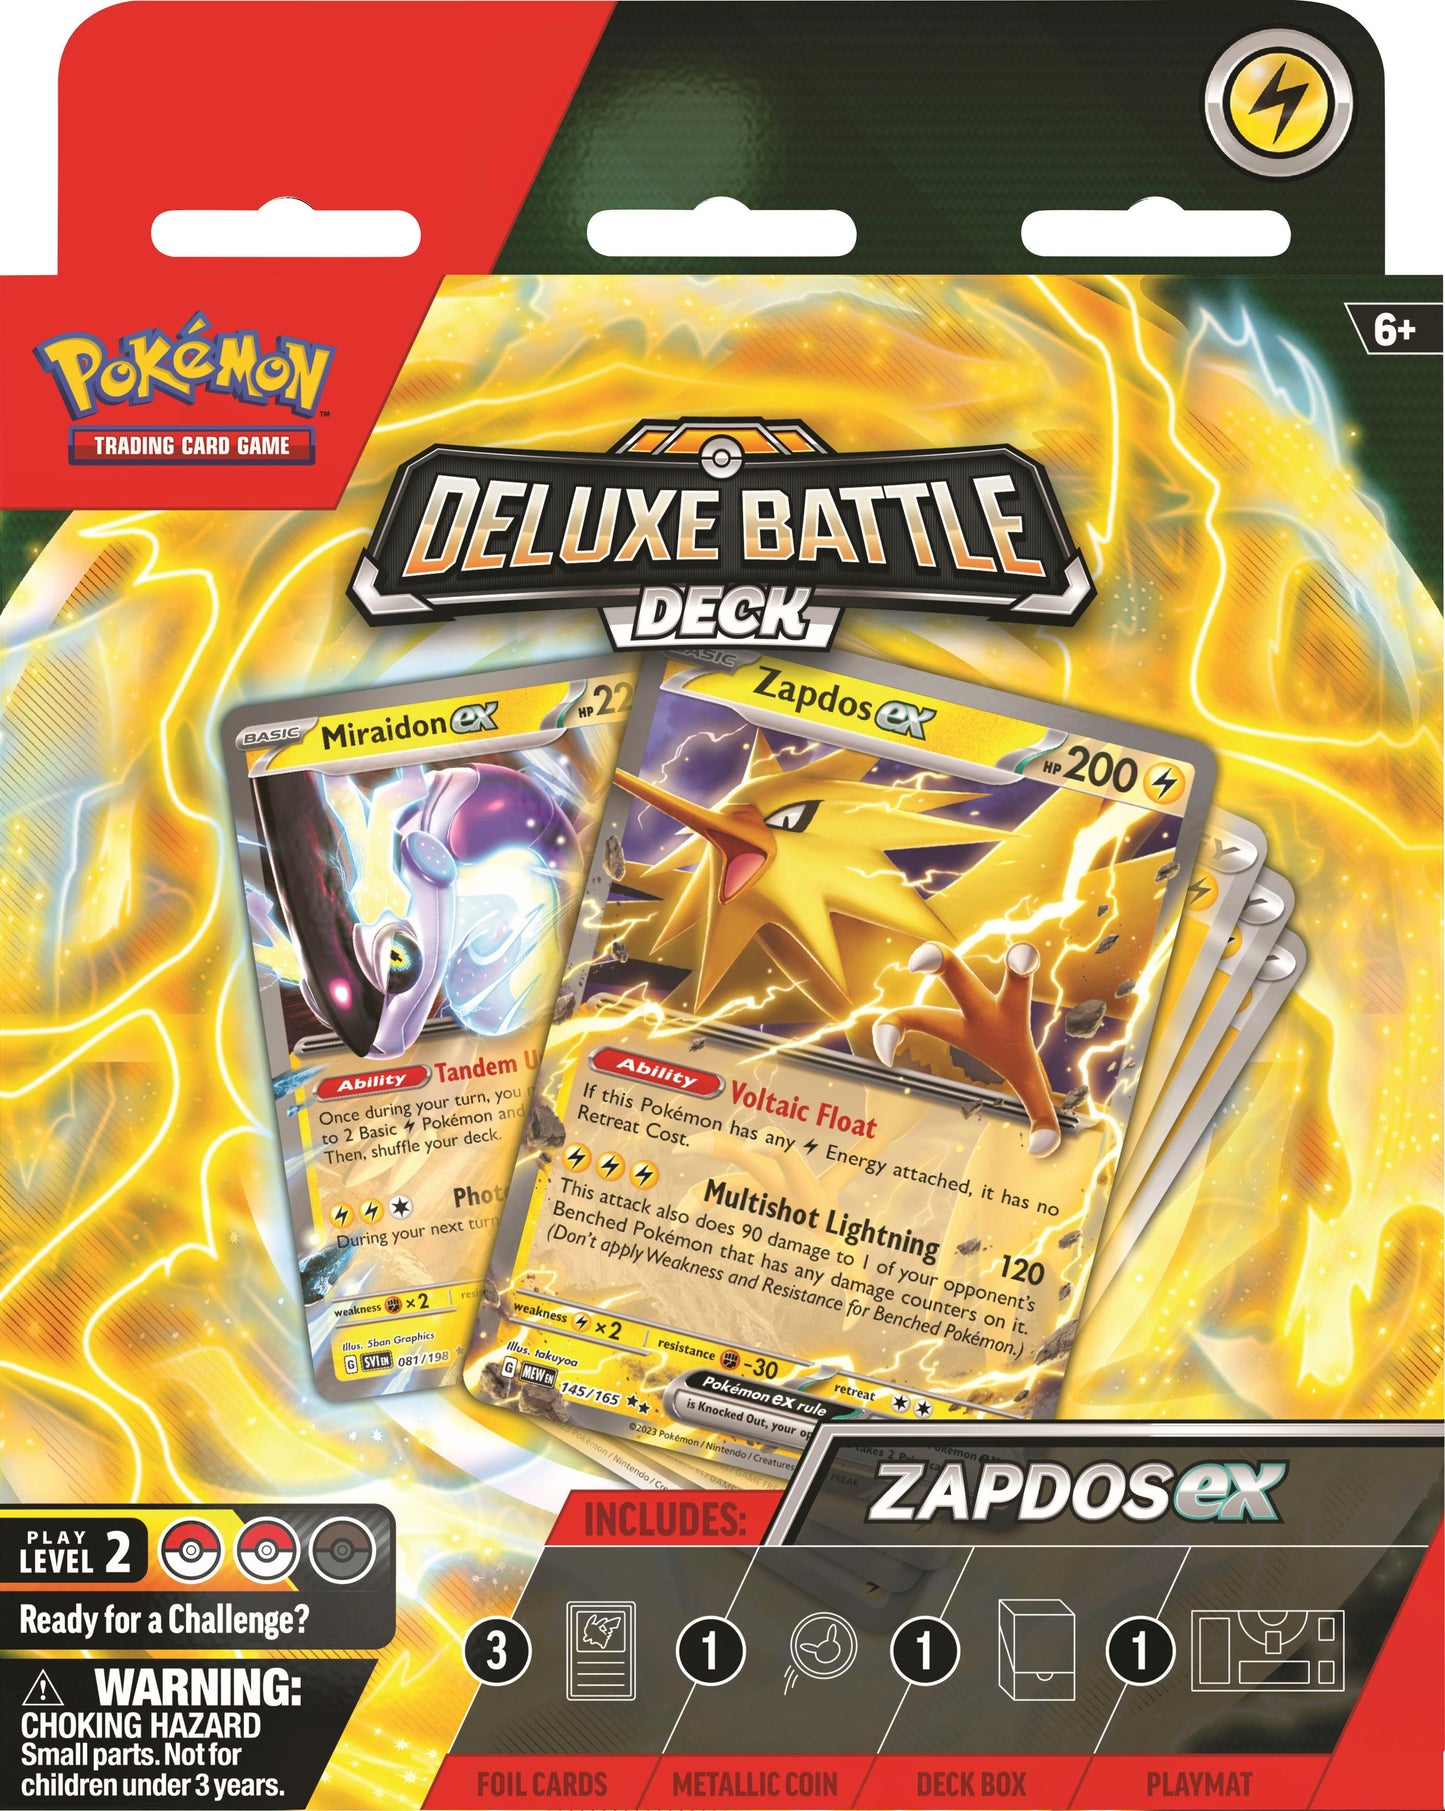 Pokémon - Deluxe Battle Deck - Zapdos ex